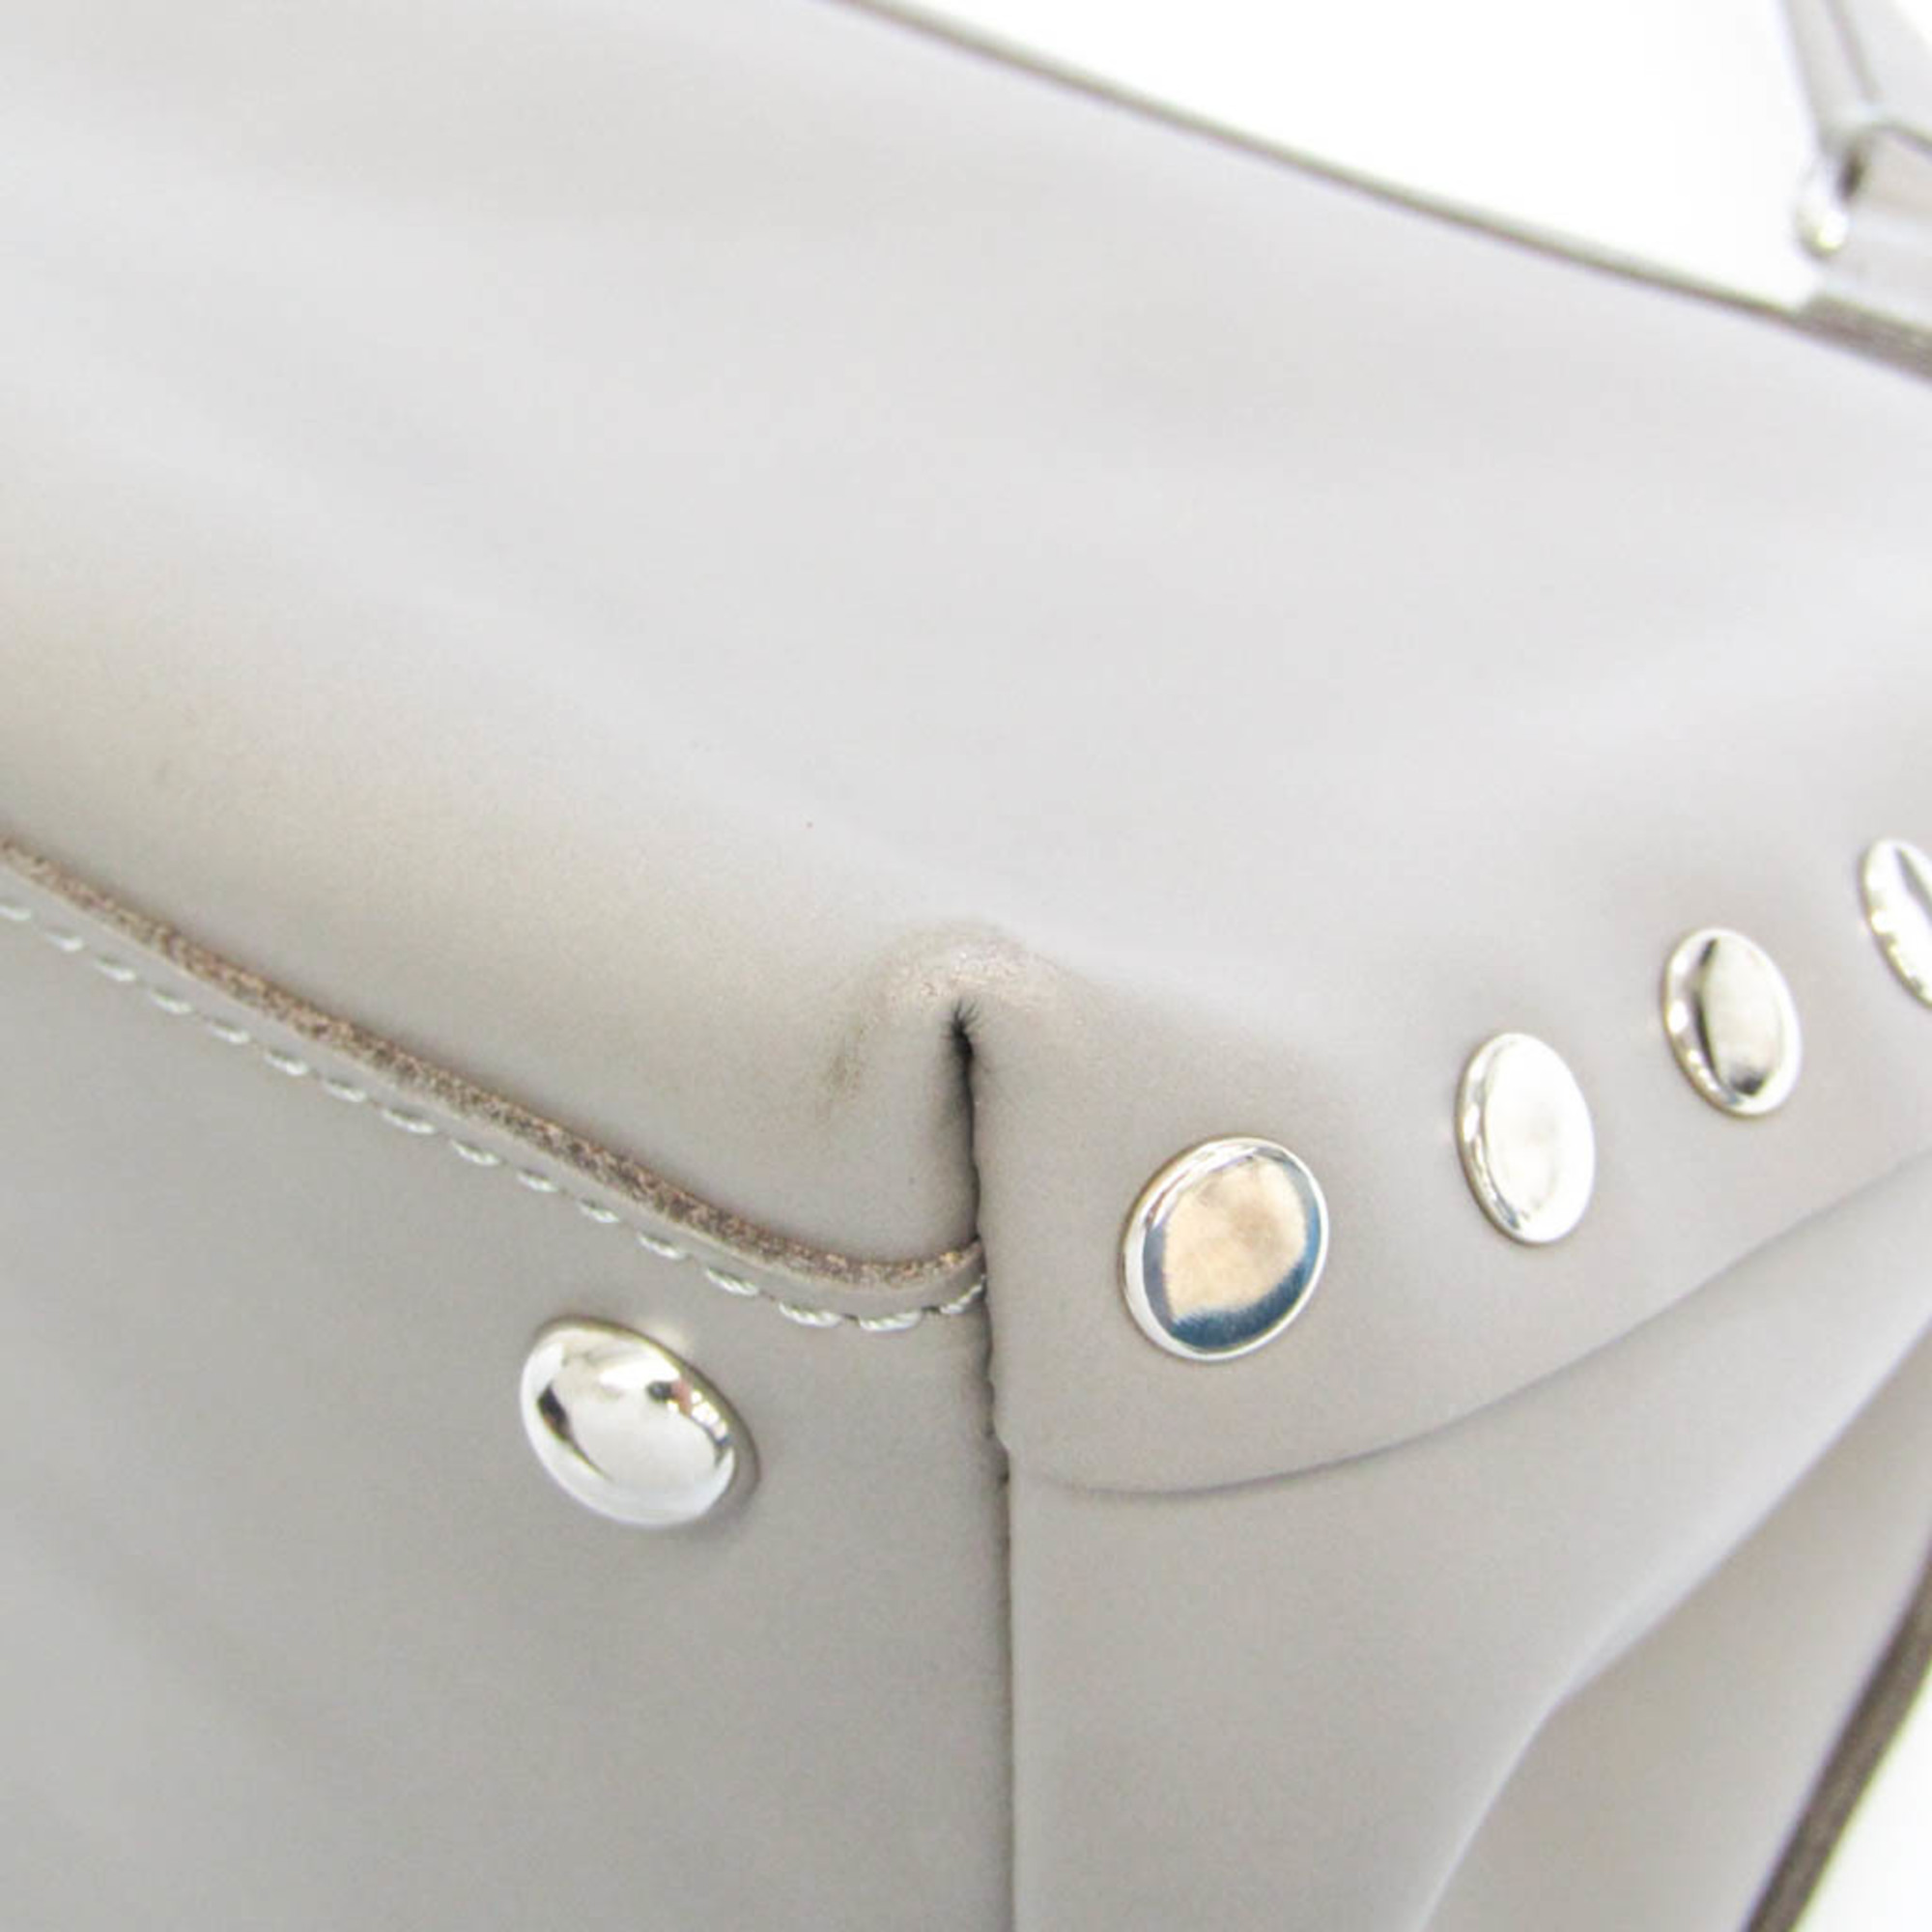 Zanellato Postina S Men,Women Leather Handbag,Shoulder Bag Gray